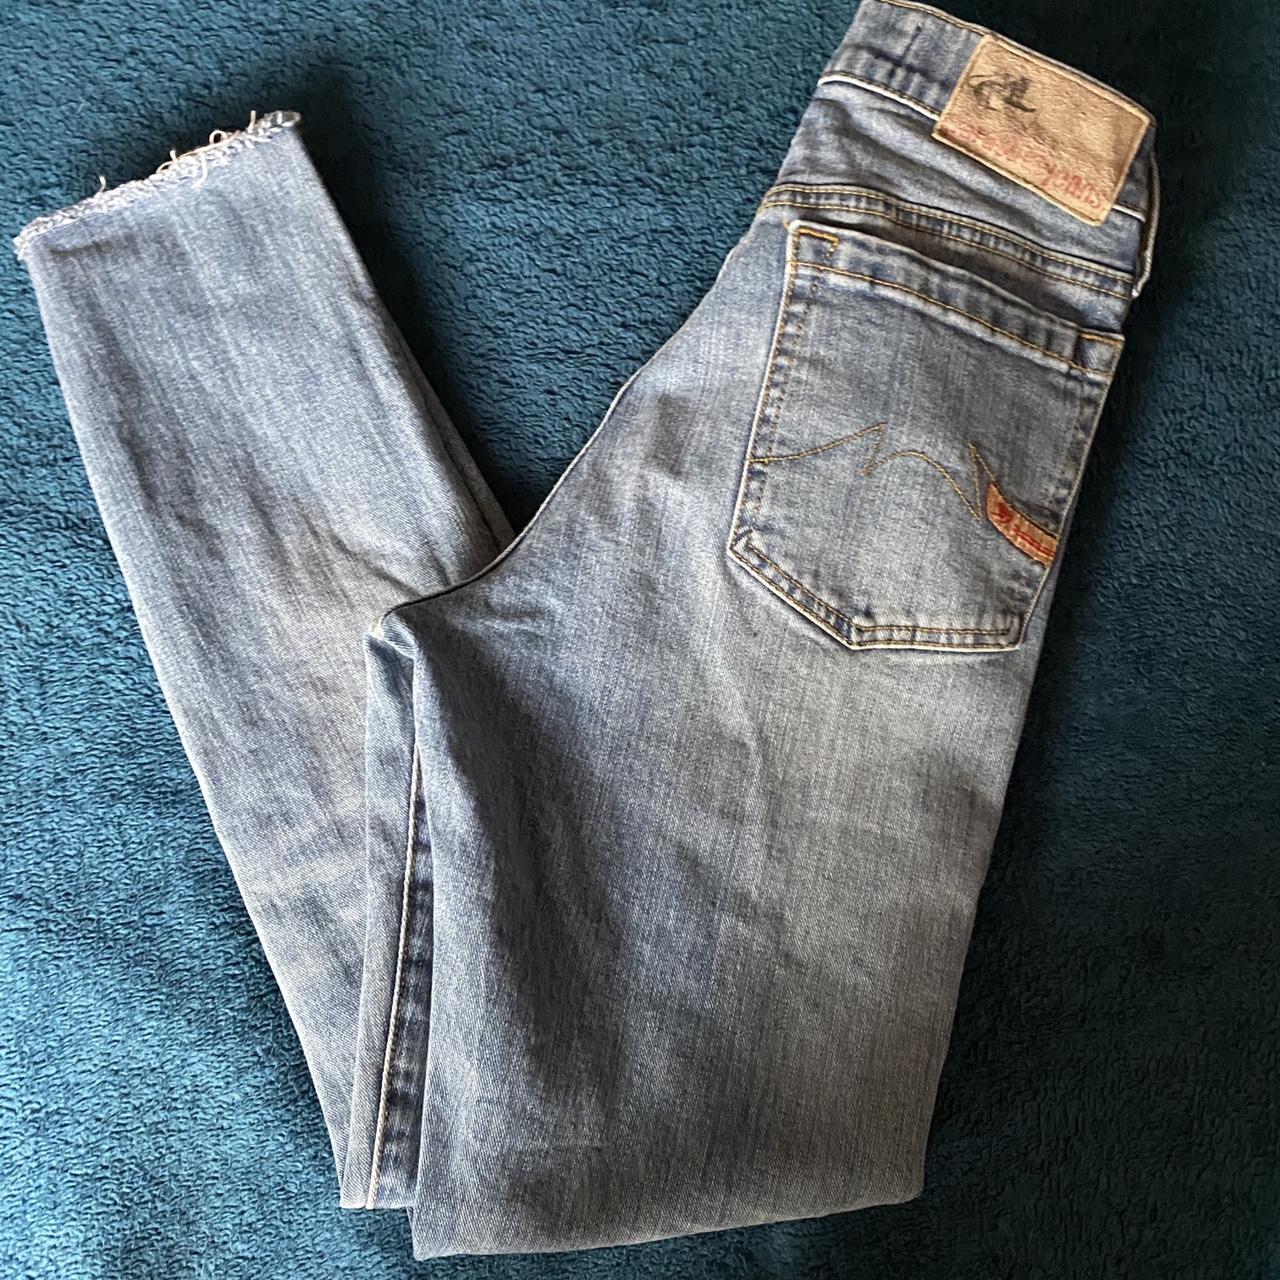 Product Image 1 - Parasuco skinny/mom jeans
Waist: 24”
Hips: 17”